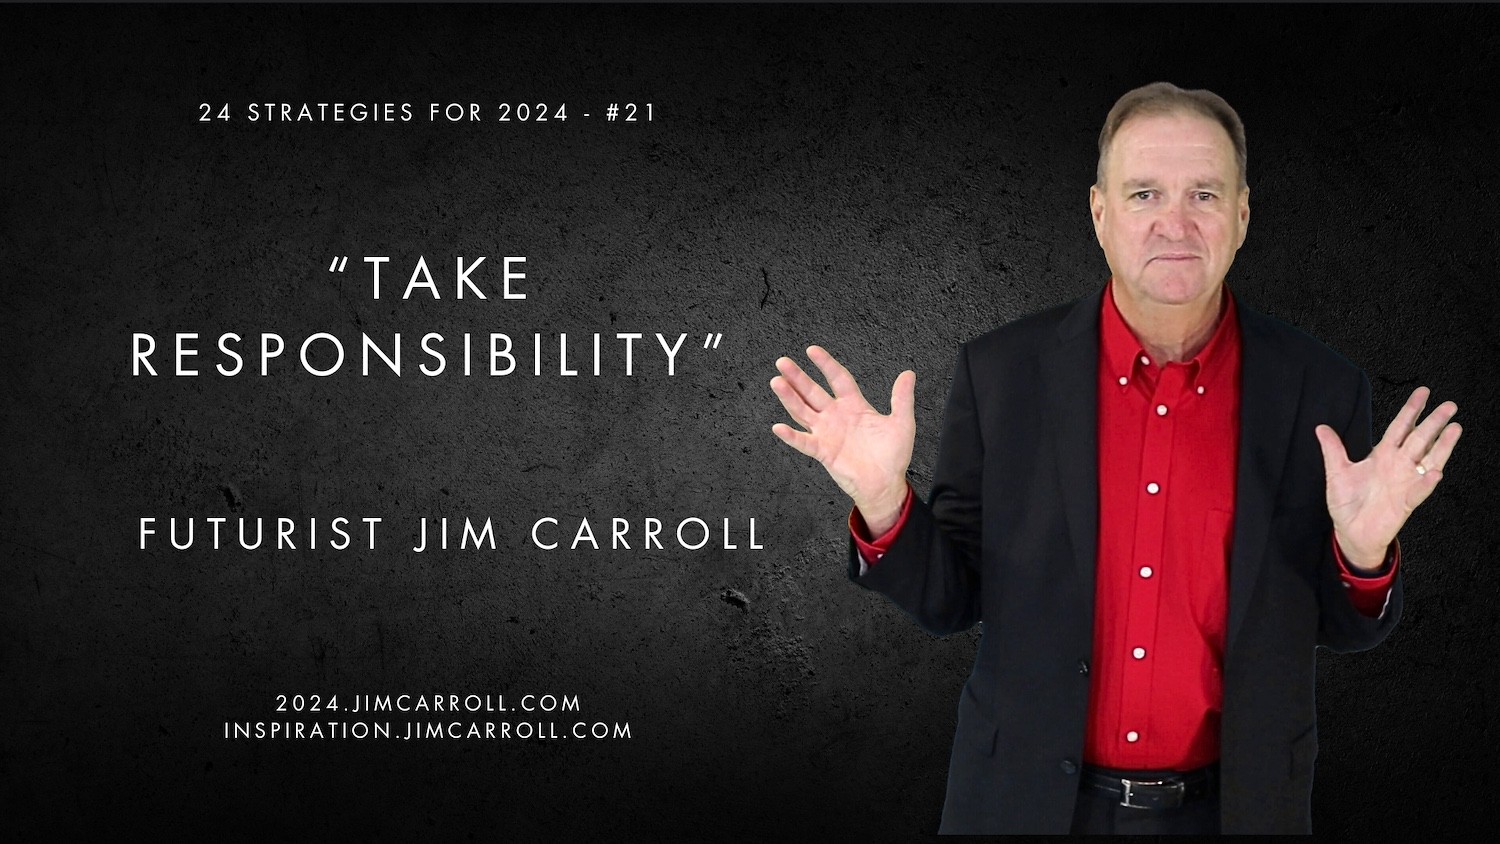 `"Take responsibility" - Futurist Jim Carroll